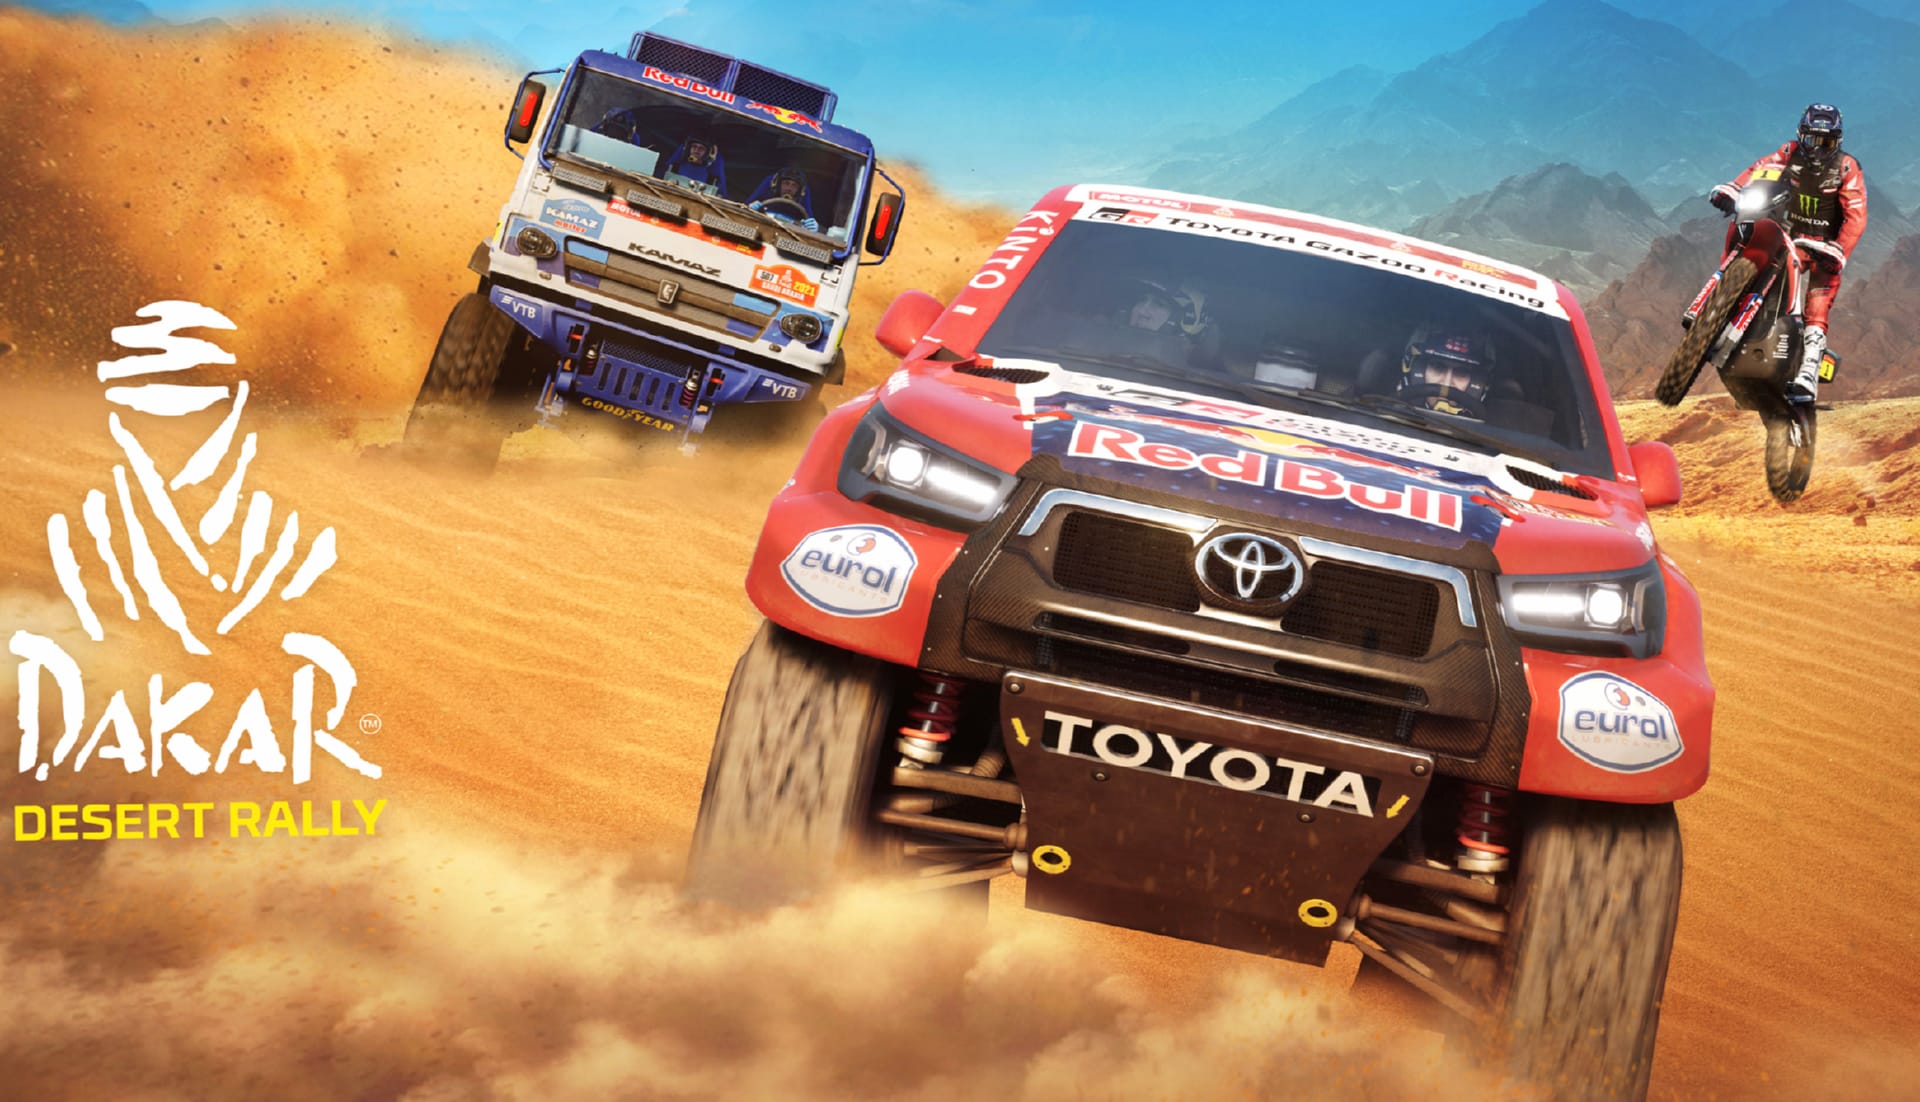 Dakar Desert Rally at 640 x 960 iPhone 4 size wallpapers HD quality